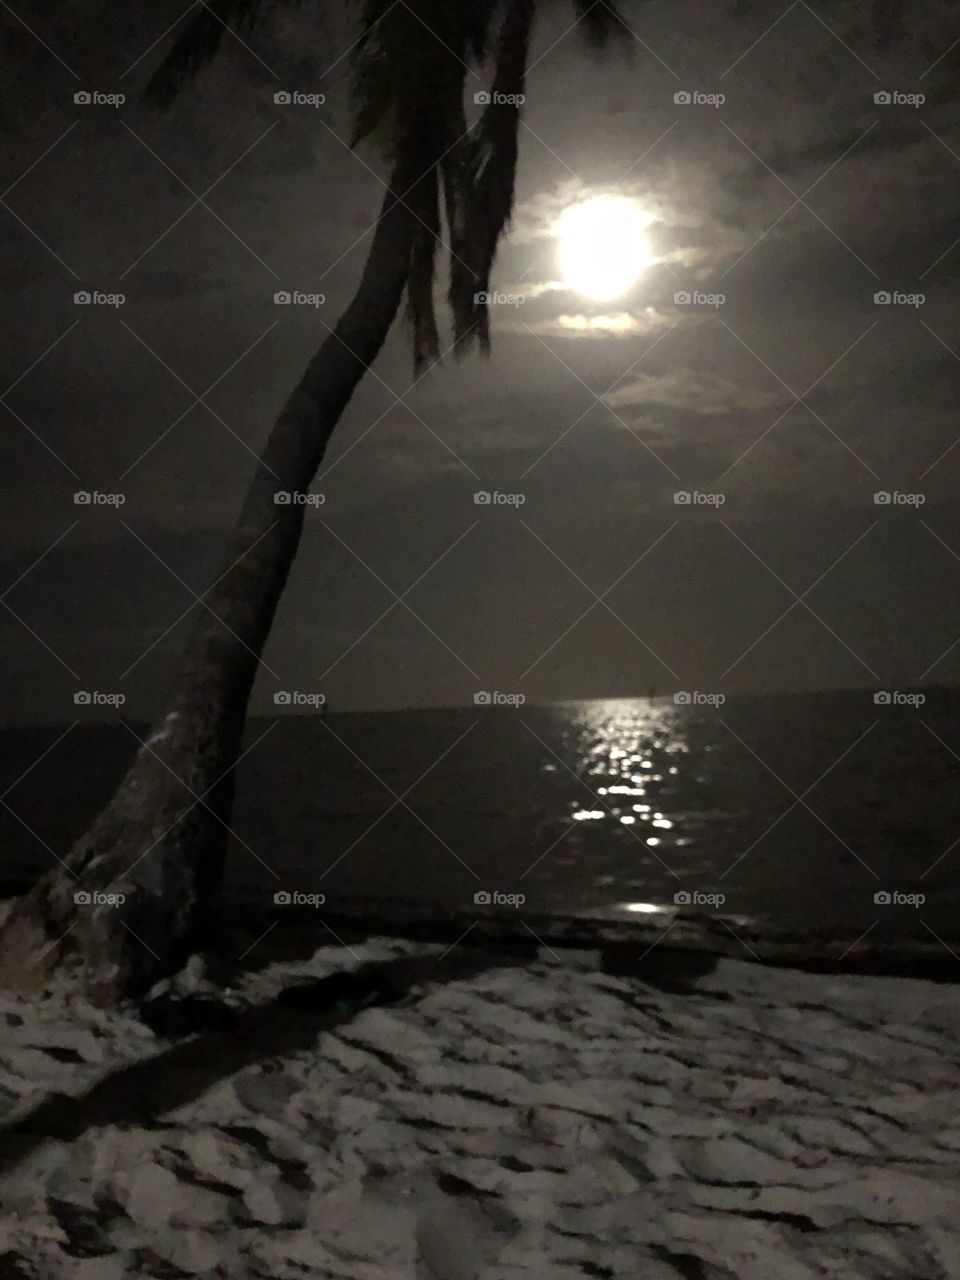 Full moon key west smather’s beach 